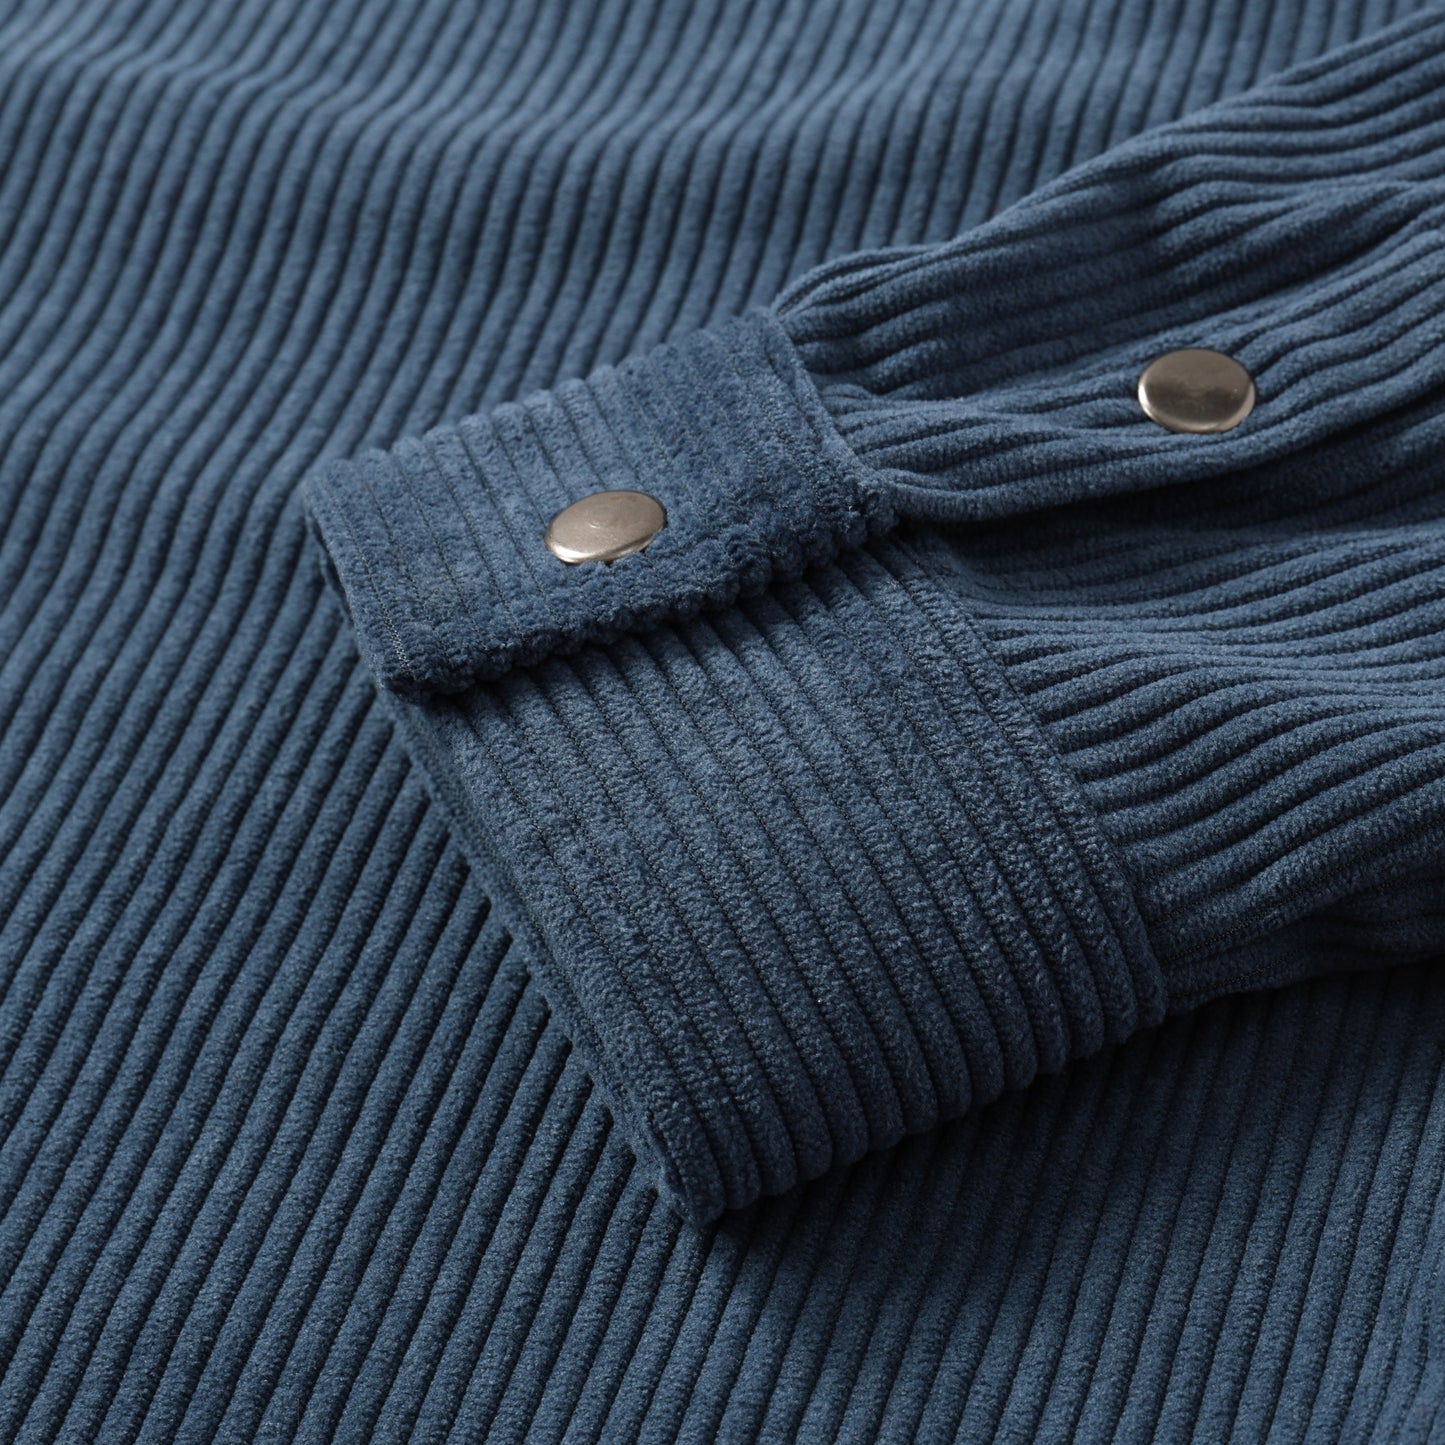 Corduroy Plain Color Snap Closure Long Sleeve Shirt-Dark Blue